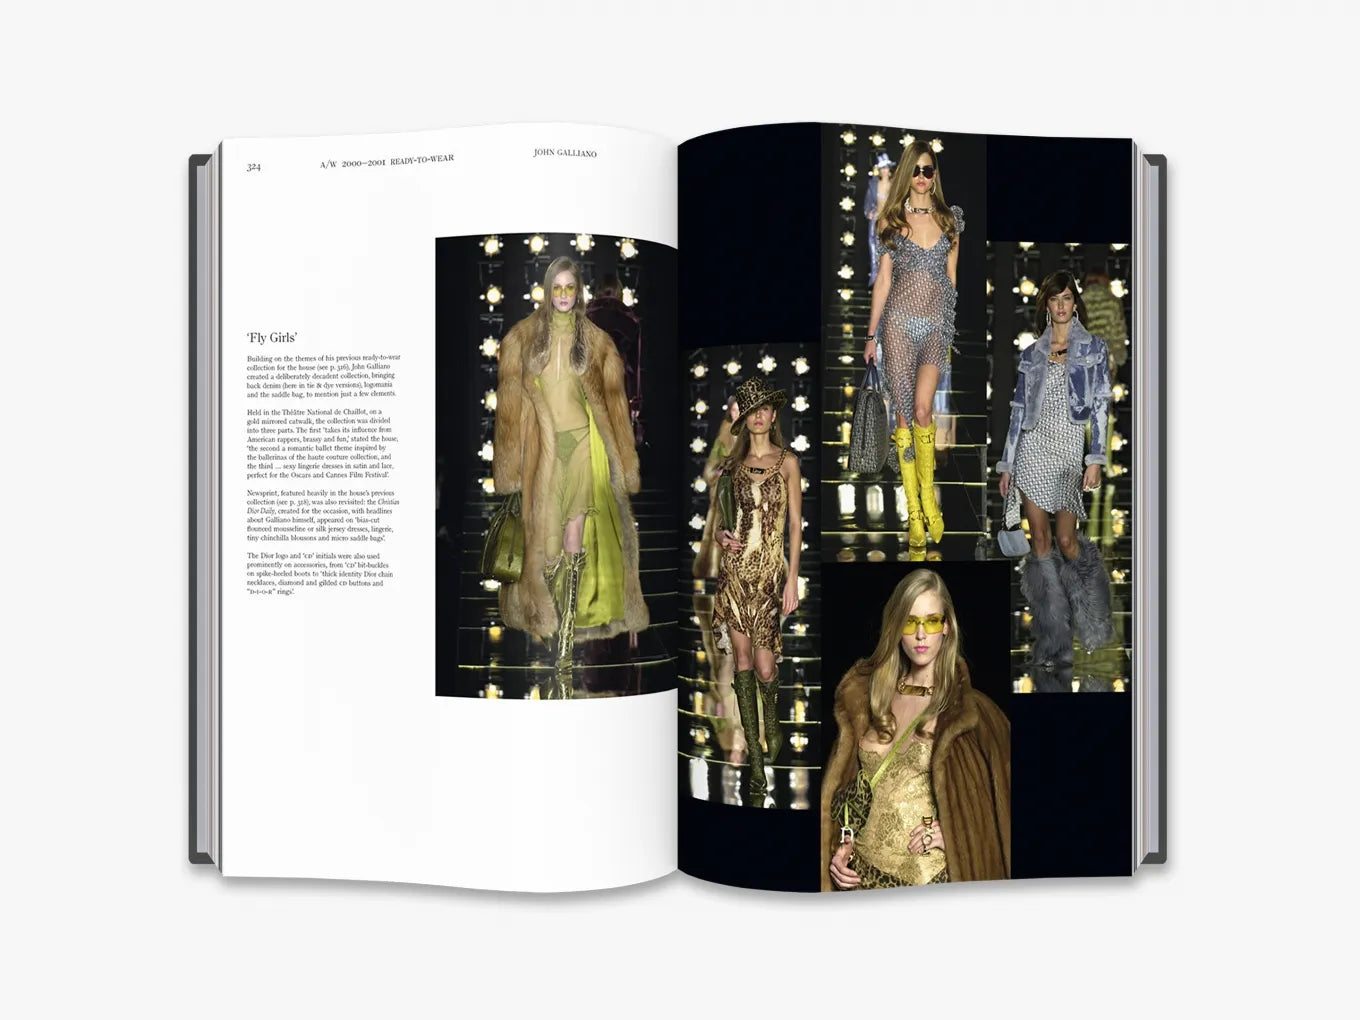 Thames & Hudson - Dior Catwalk - Books